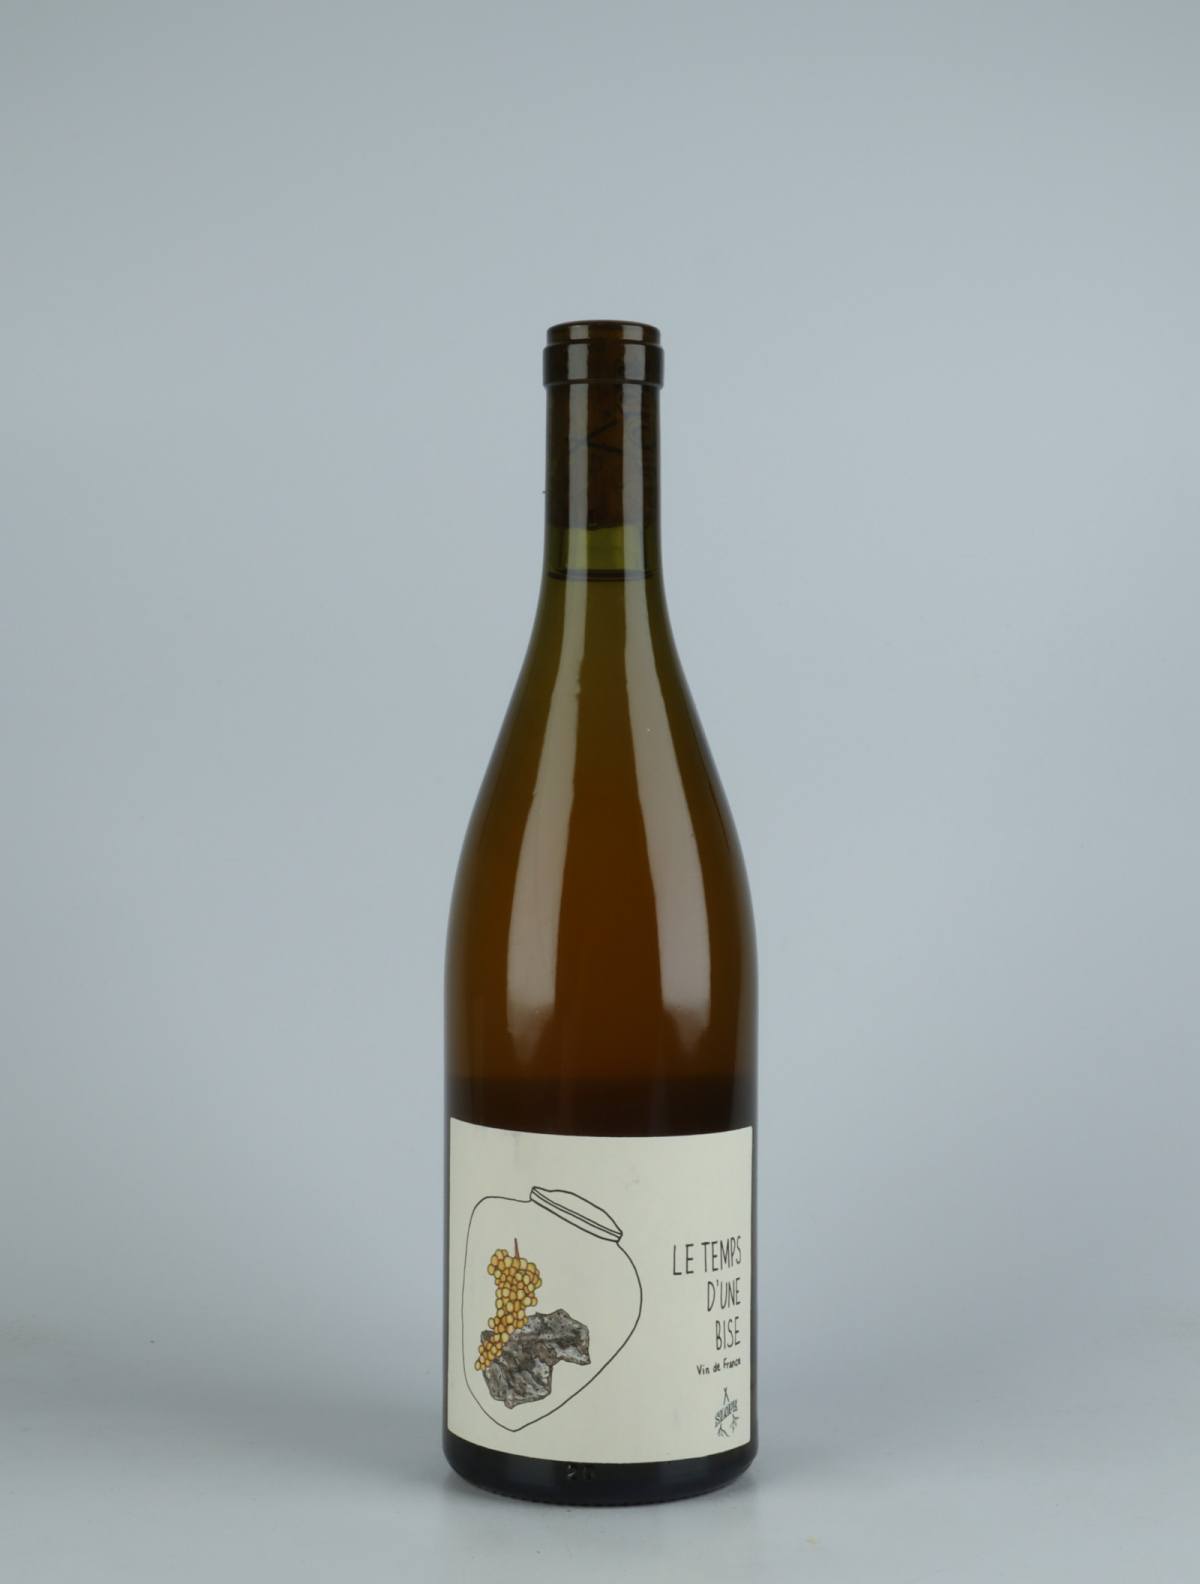 A bottle 2021 Le Temps d'une Bise Orange wine from Slope, Rhône in France